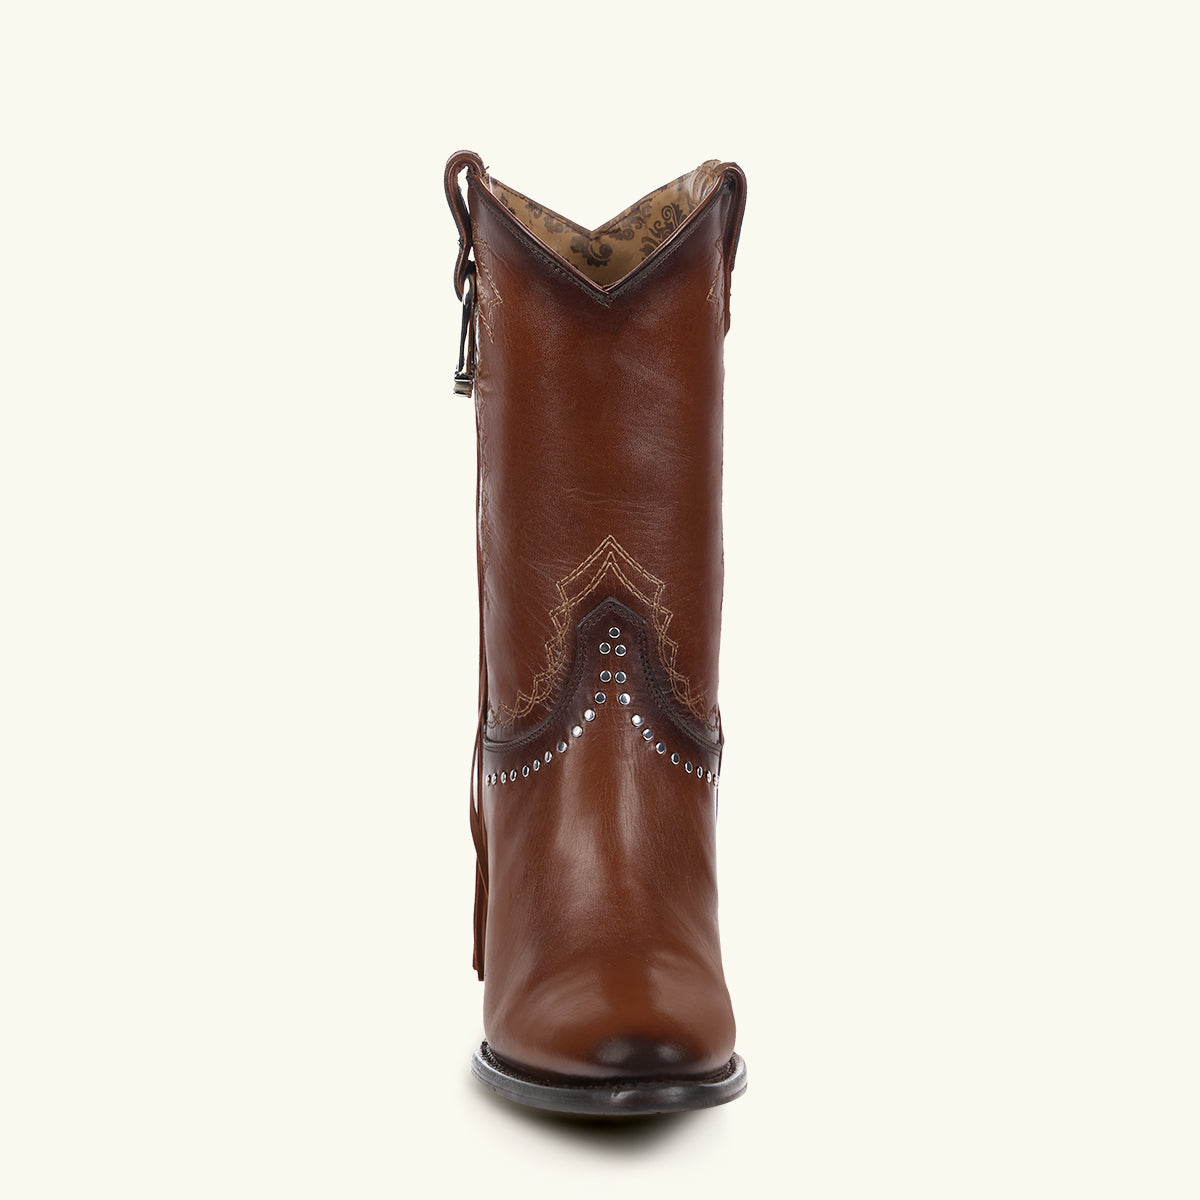 Handmade honey leather western style boot